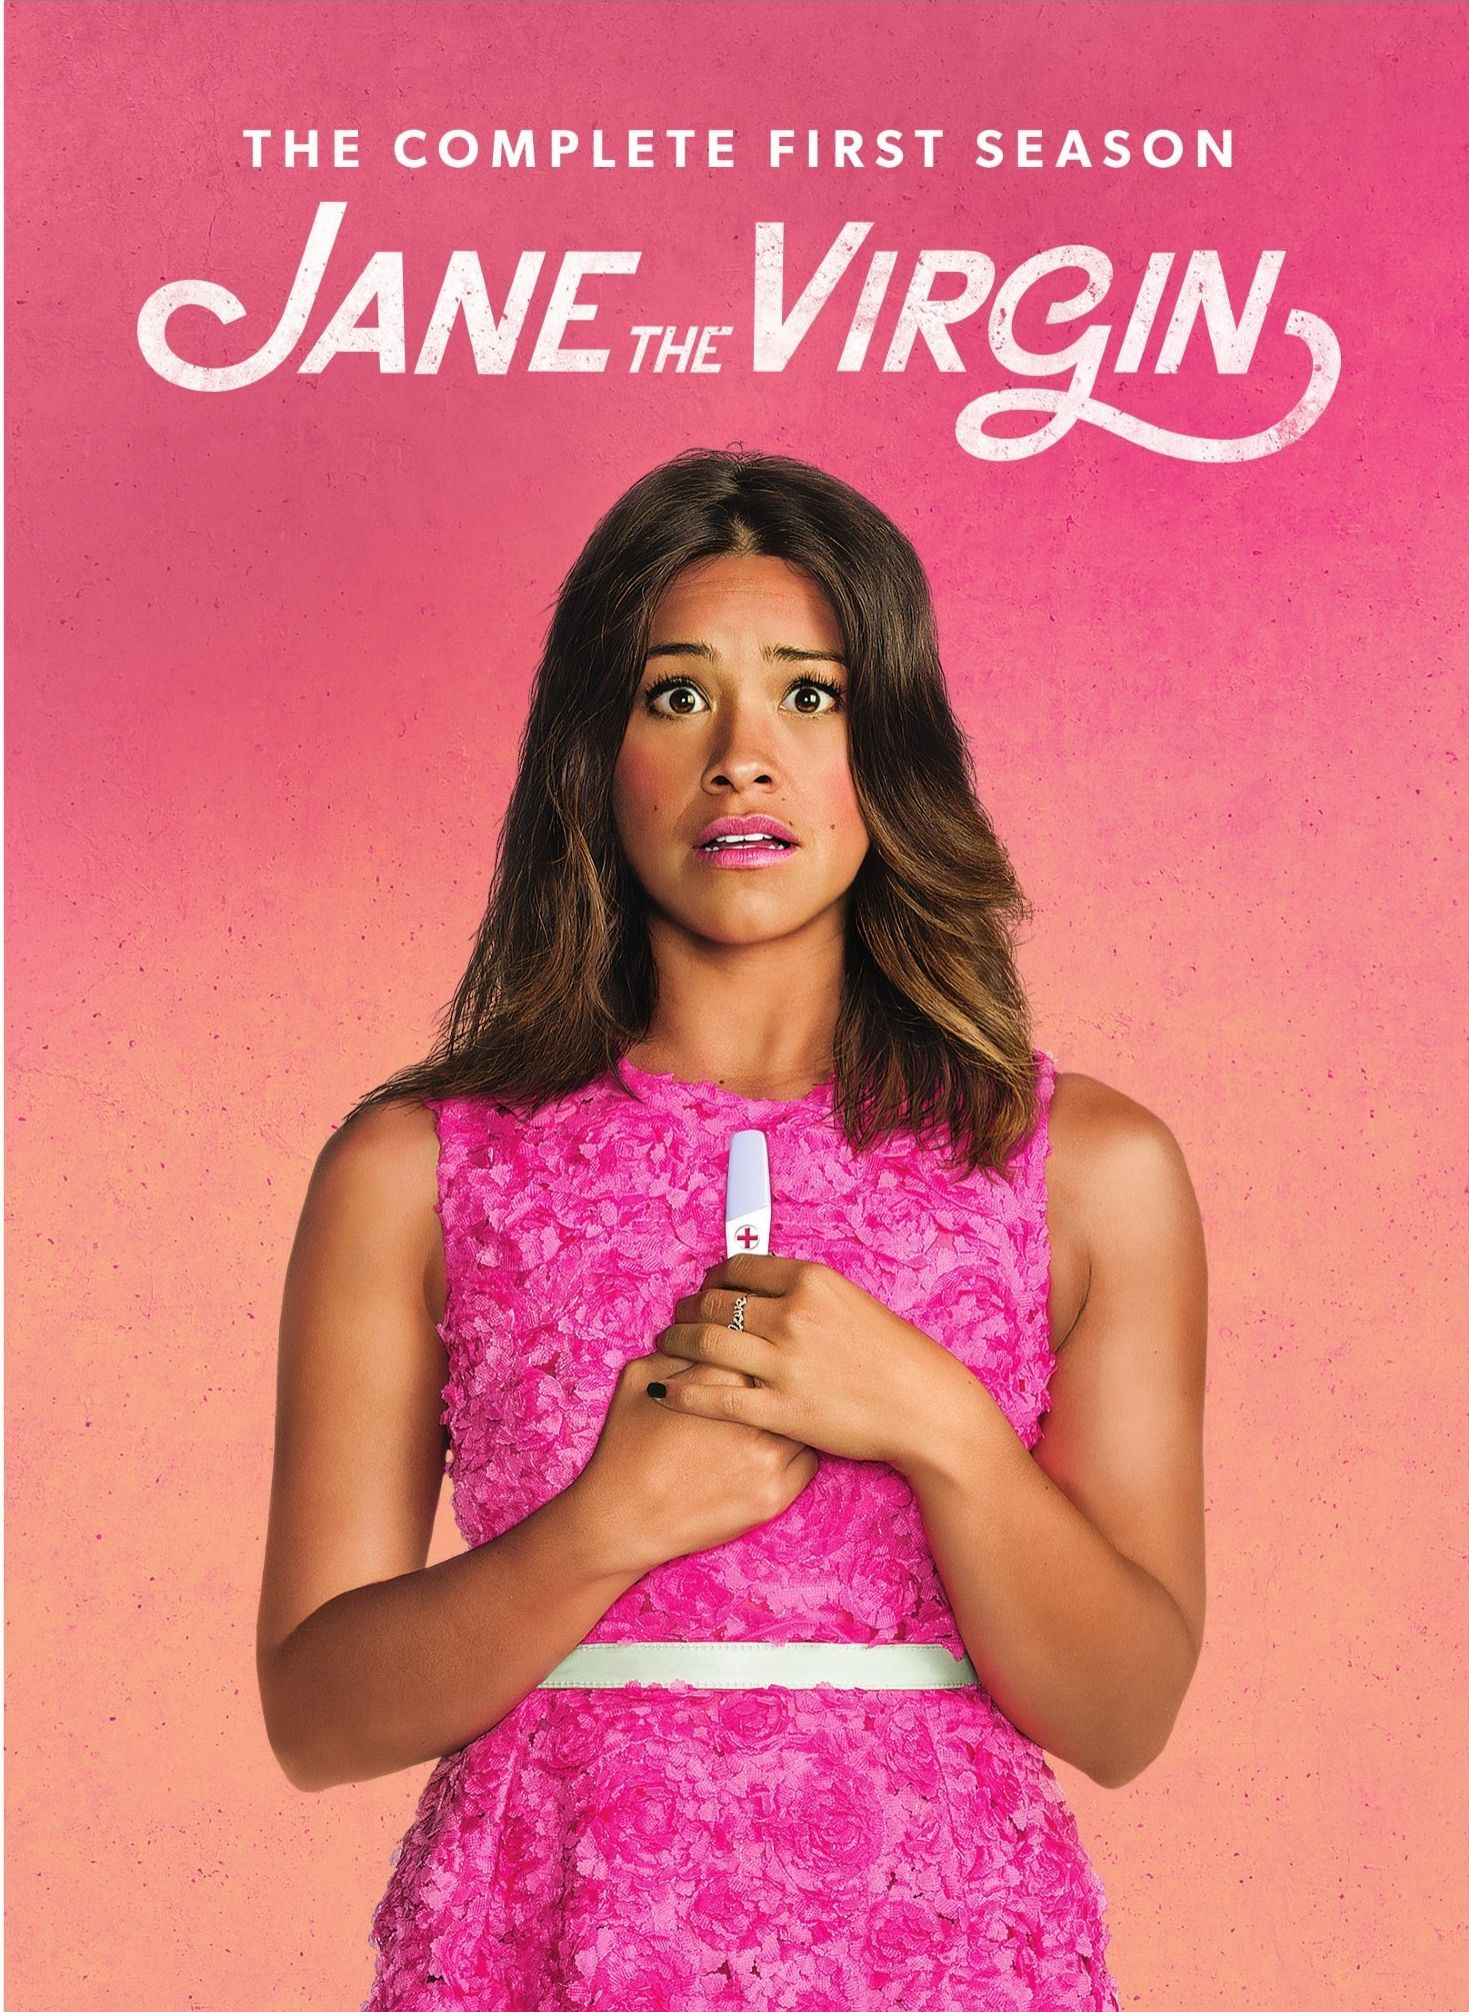 Jane The Virgin Season One DVD Review